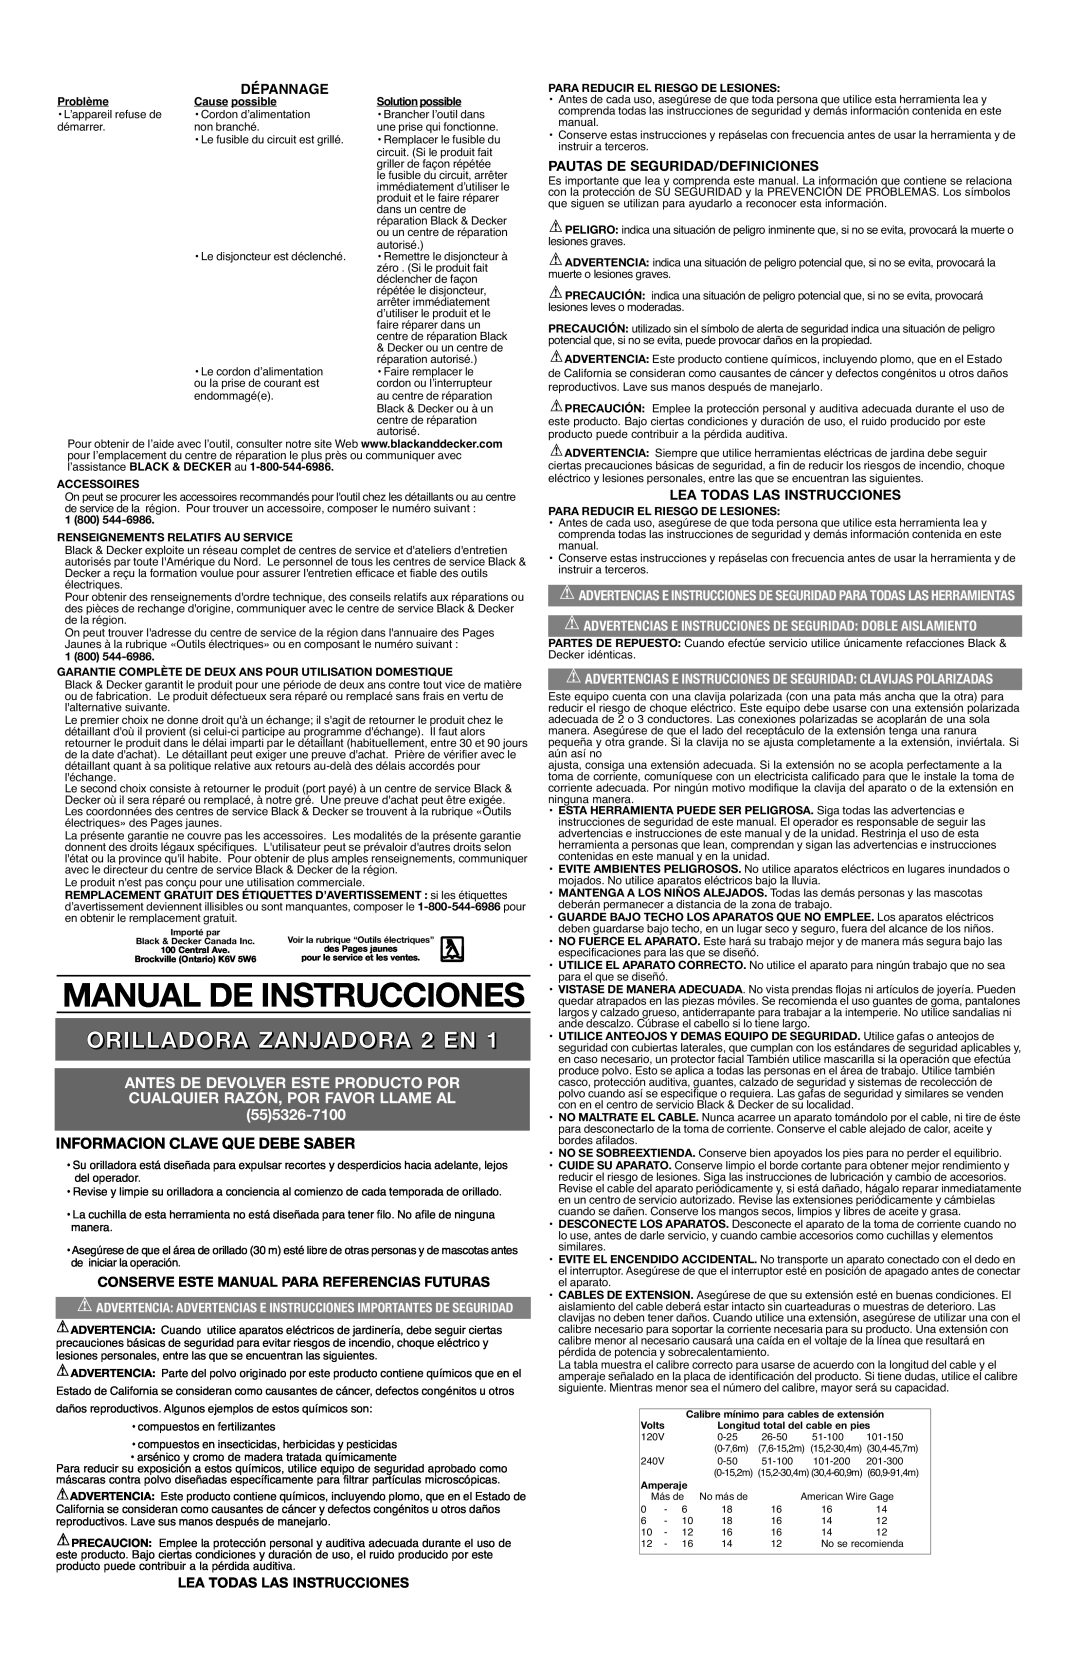 Black & Decker LE750 Type 4 instruction manual ORILLADORA ZANJADORA 2 EN, Informacion Clave Que Debe Saber, Dépannage 